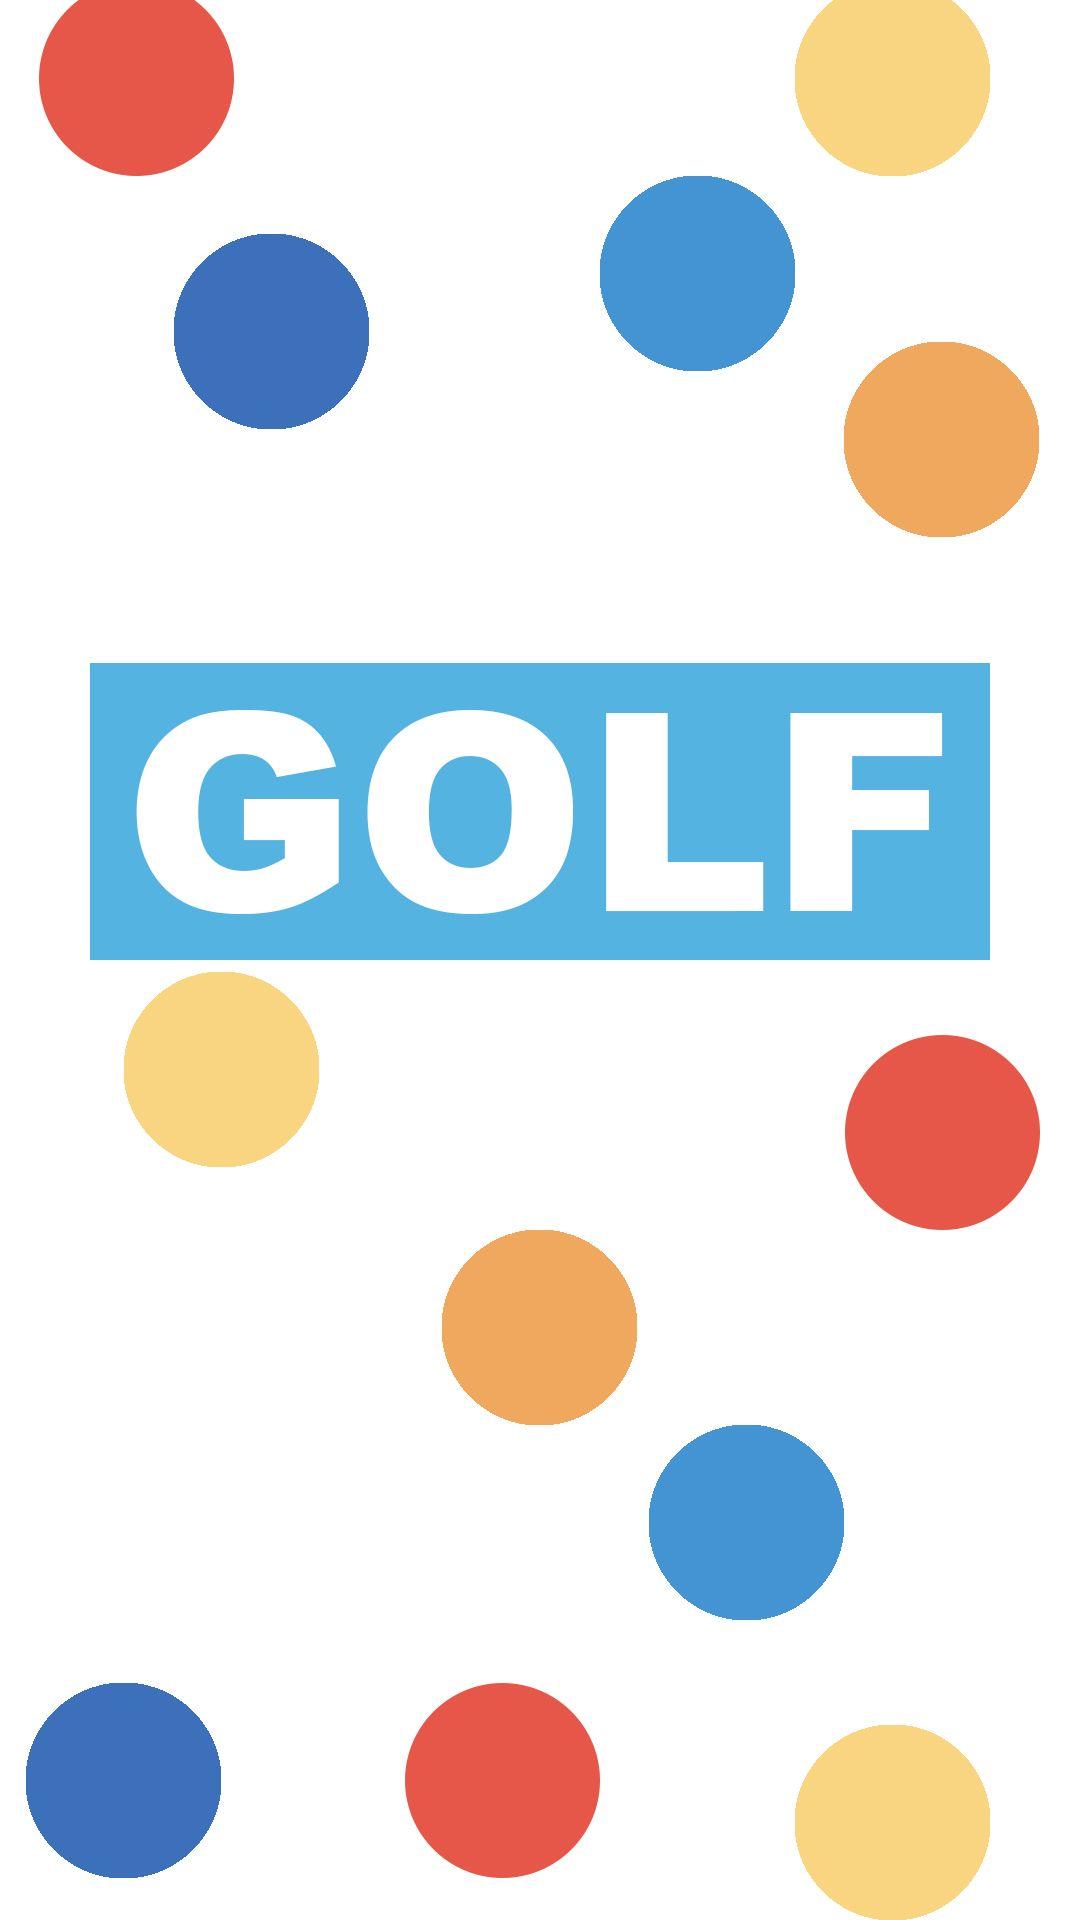 Golf Wang Wallpapers - Wallpaper Cave